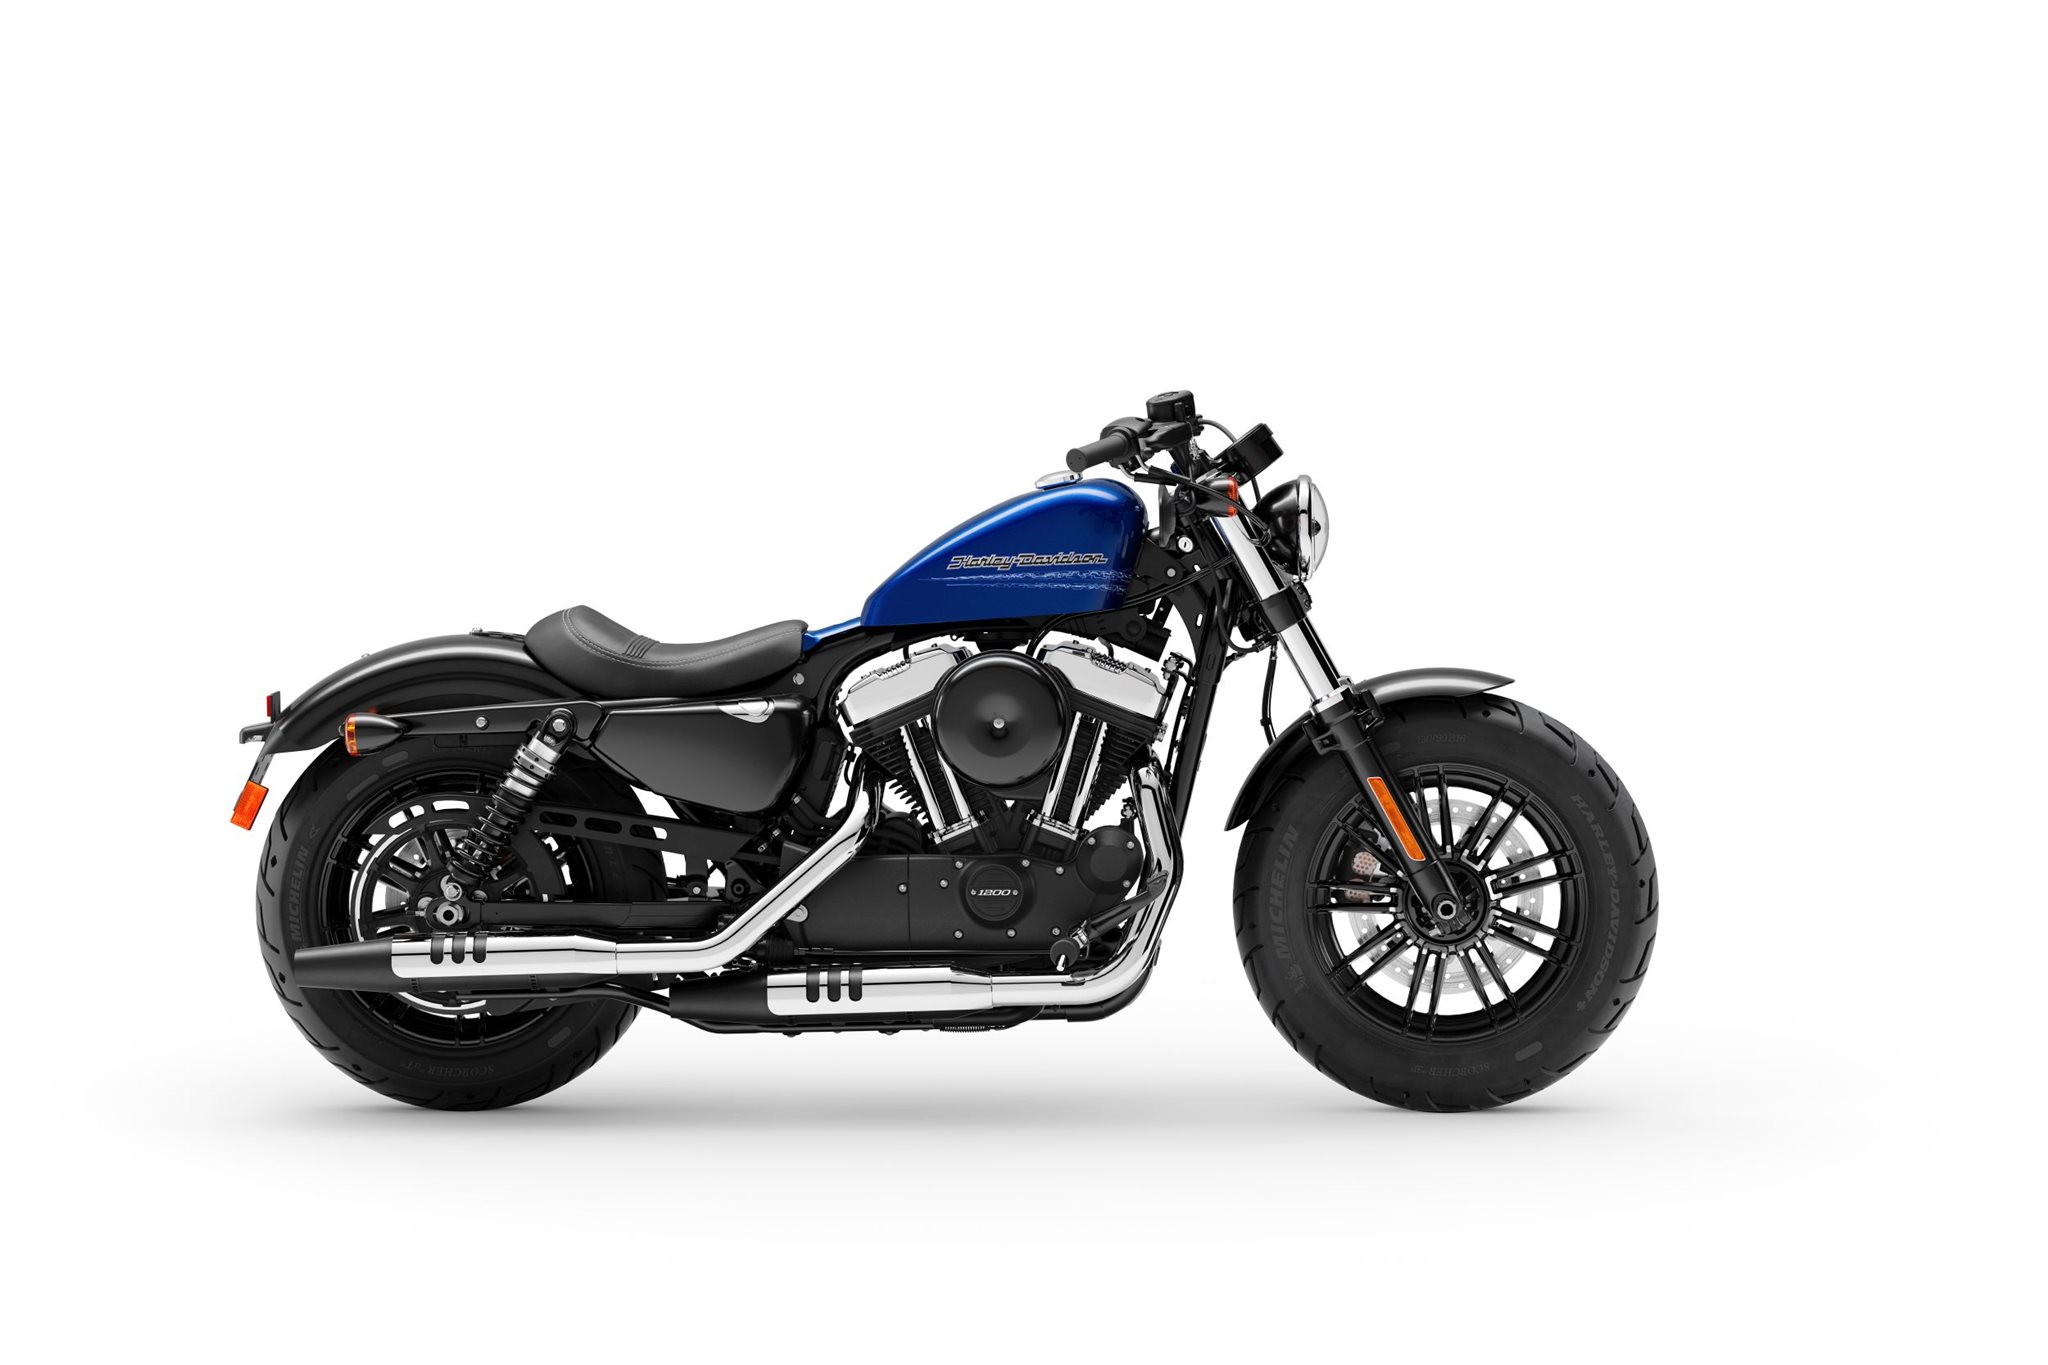 Motorrad Vergleich Harley Davidson Sportster Xl 1200x Forty Eight 2019 Vs Ducati Monster 1000 2005